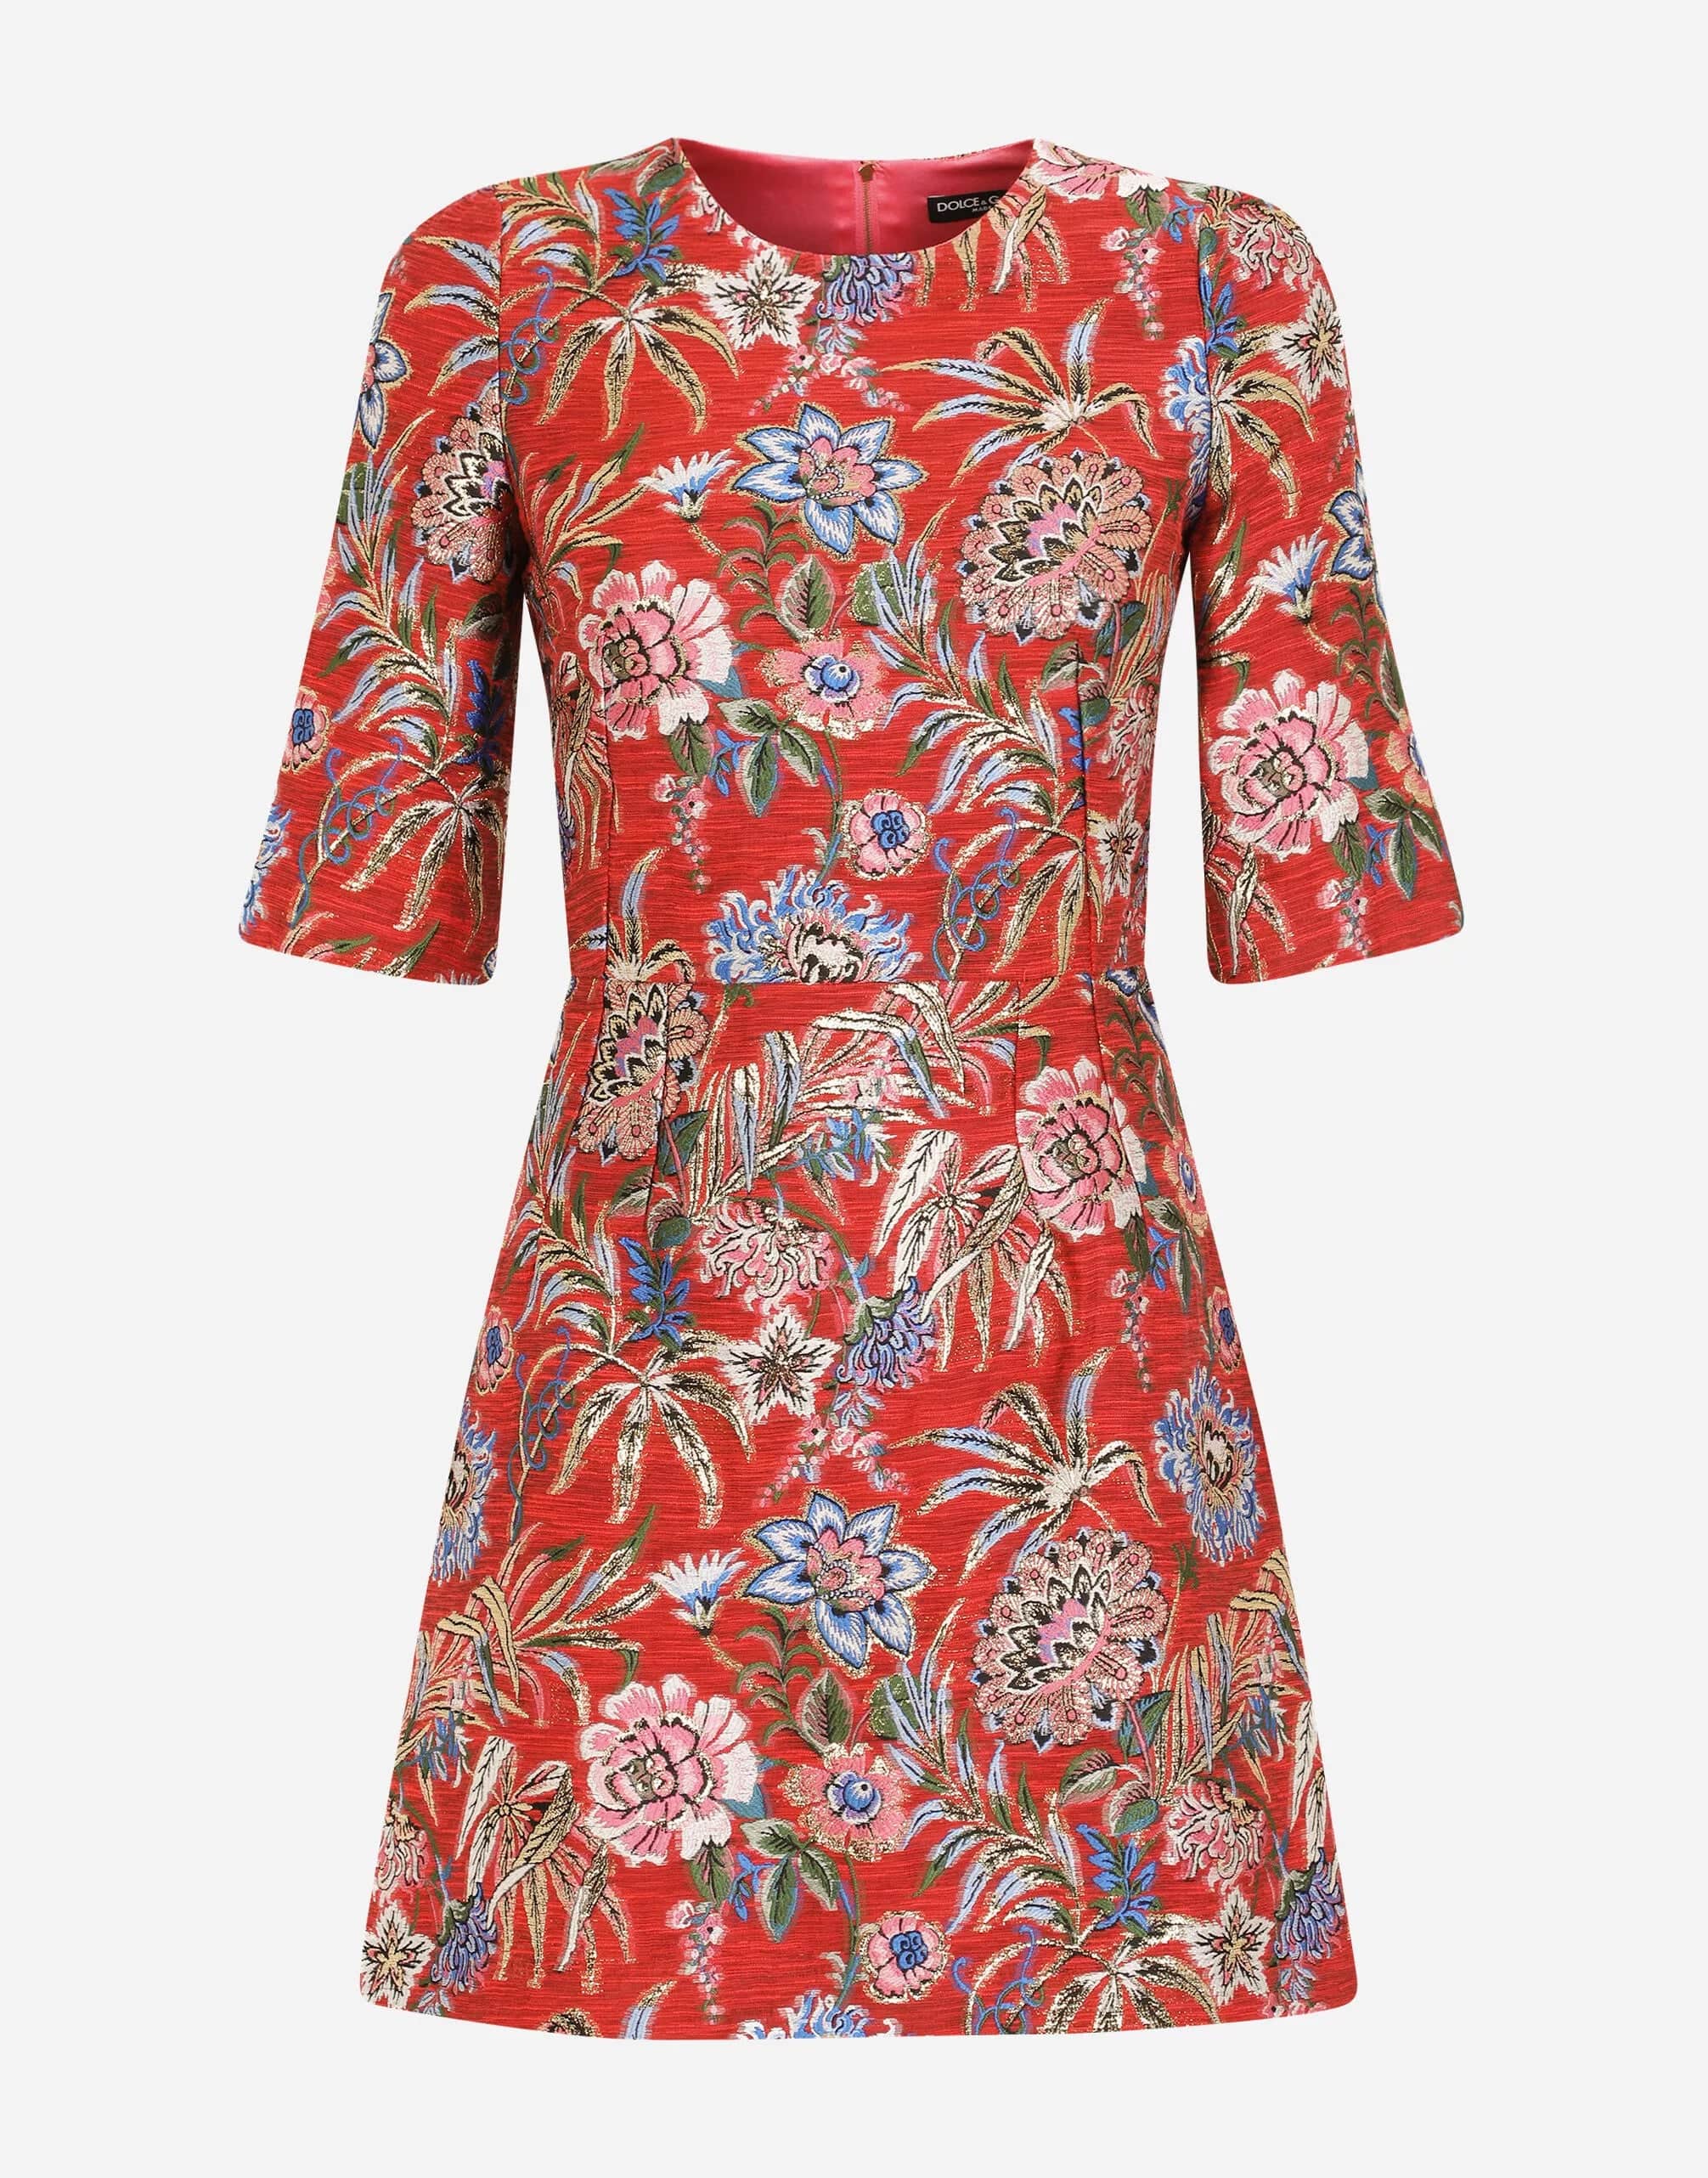 Dolce & Gabbana Short Floral Jacquard Dress